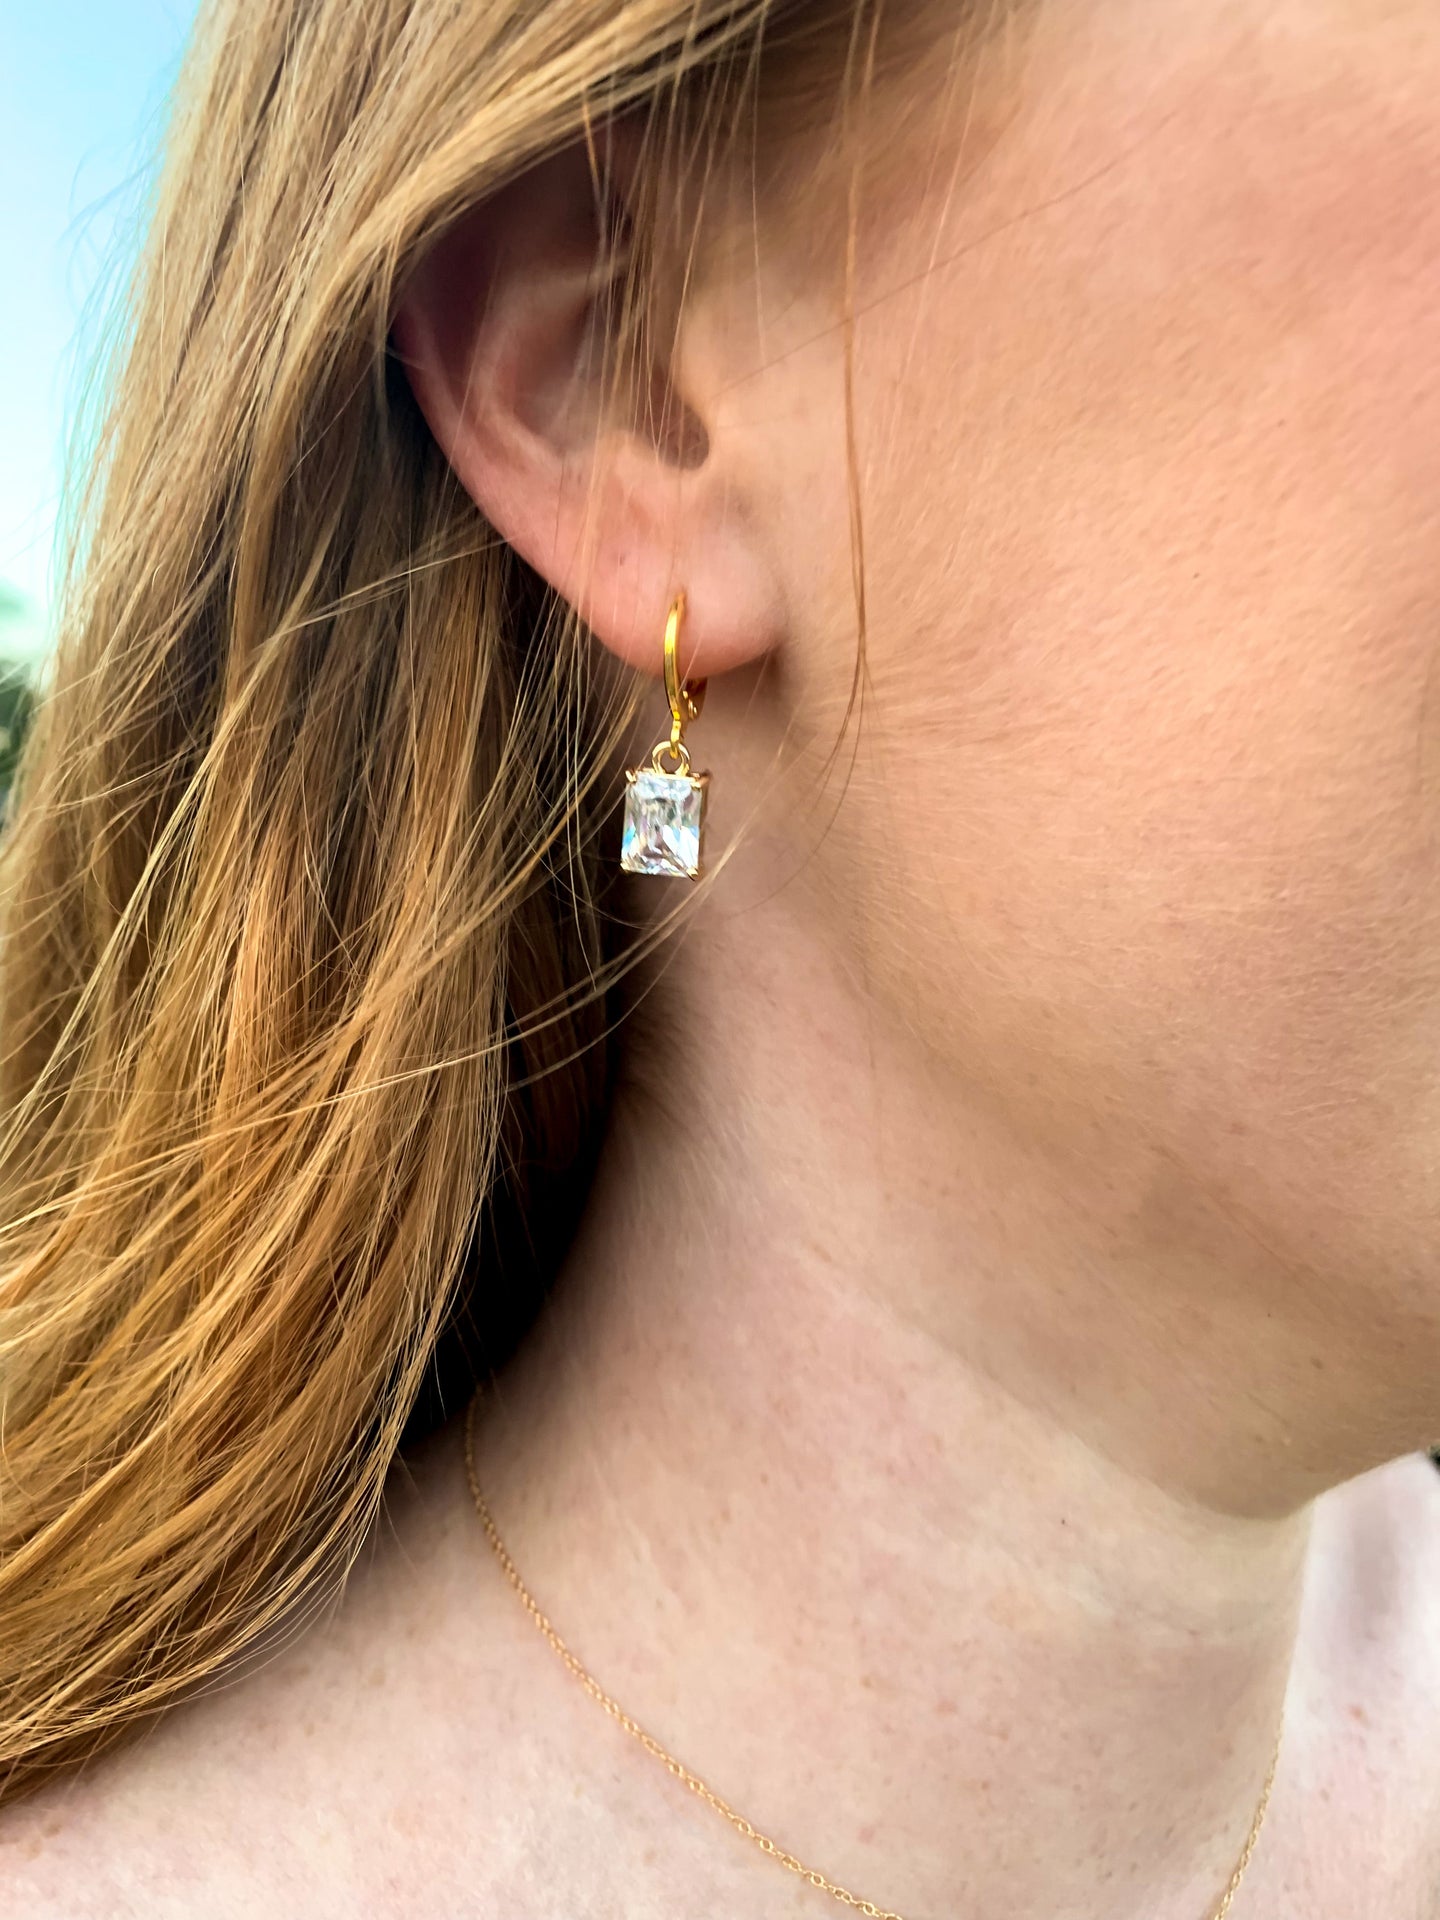 DRIP JEWELRY Earrings OG : Diamond Clear rec drop earrings : more color options!